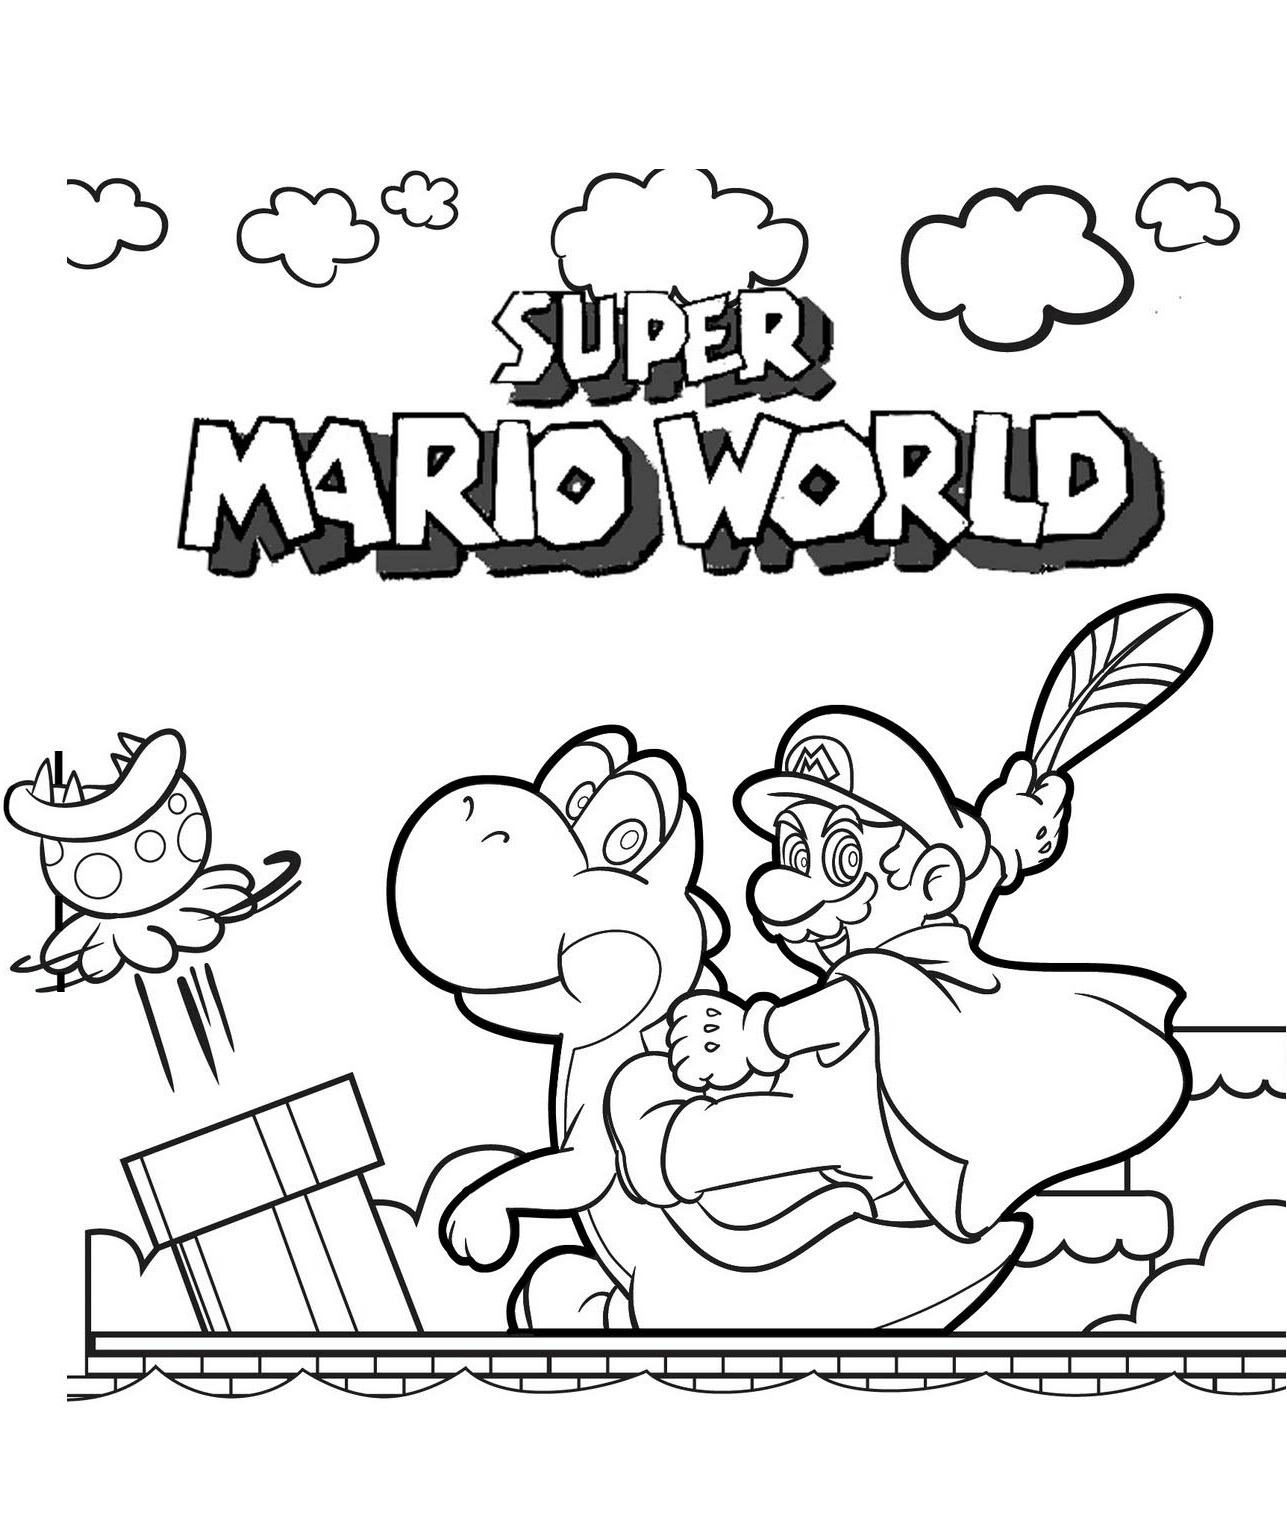 Super Mario World adventures from Mario